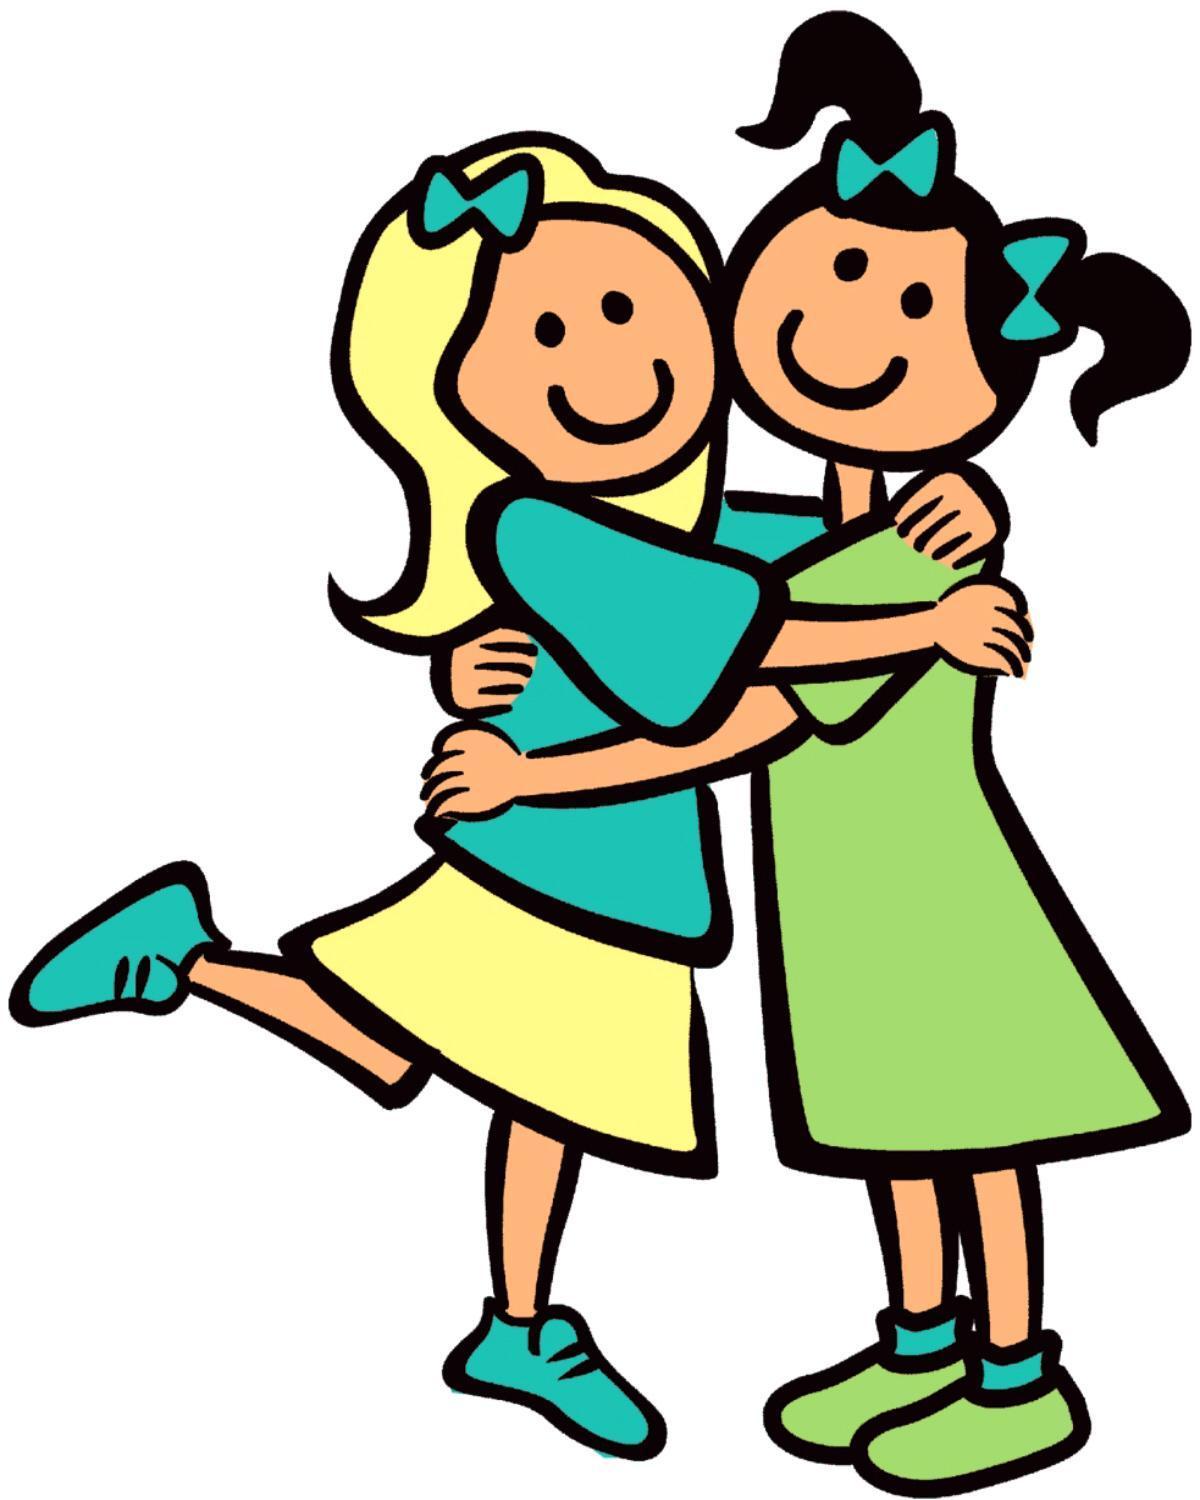 Free Cartoon Boy And Girl Hugging, Download Free Cartoon Boy And Girl ... Boy And Girl Hugging Drawing